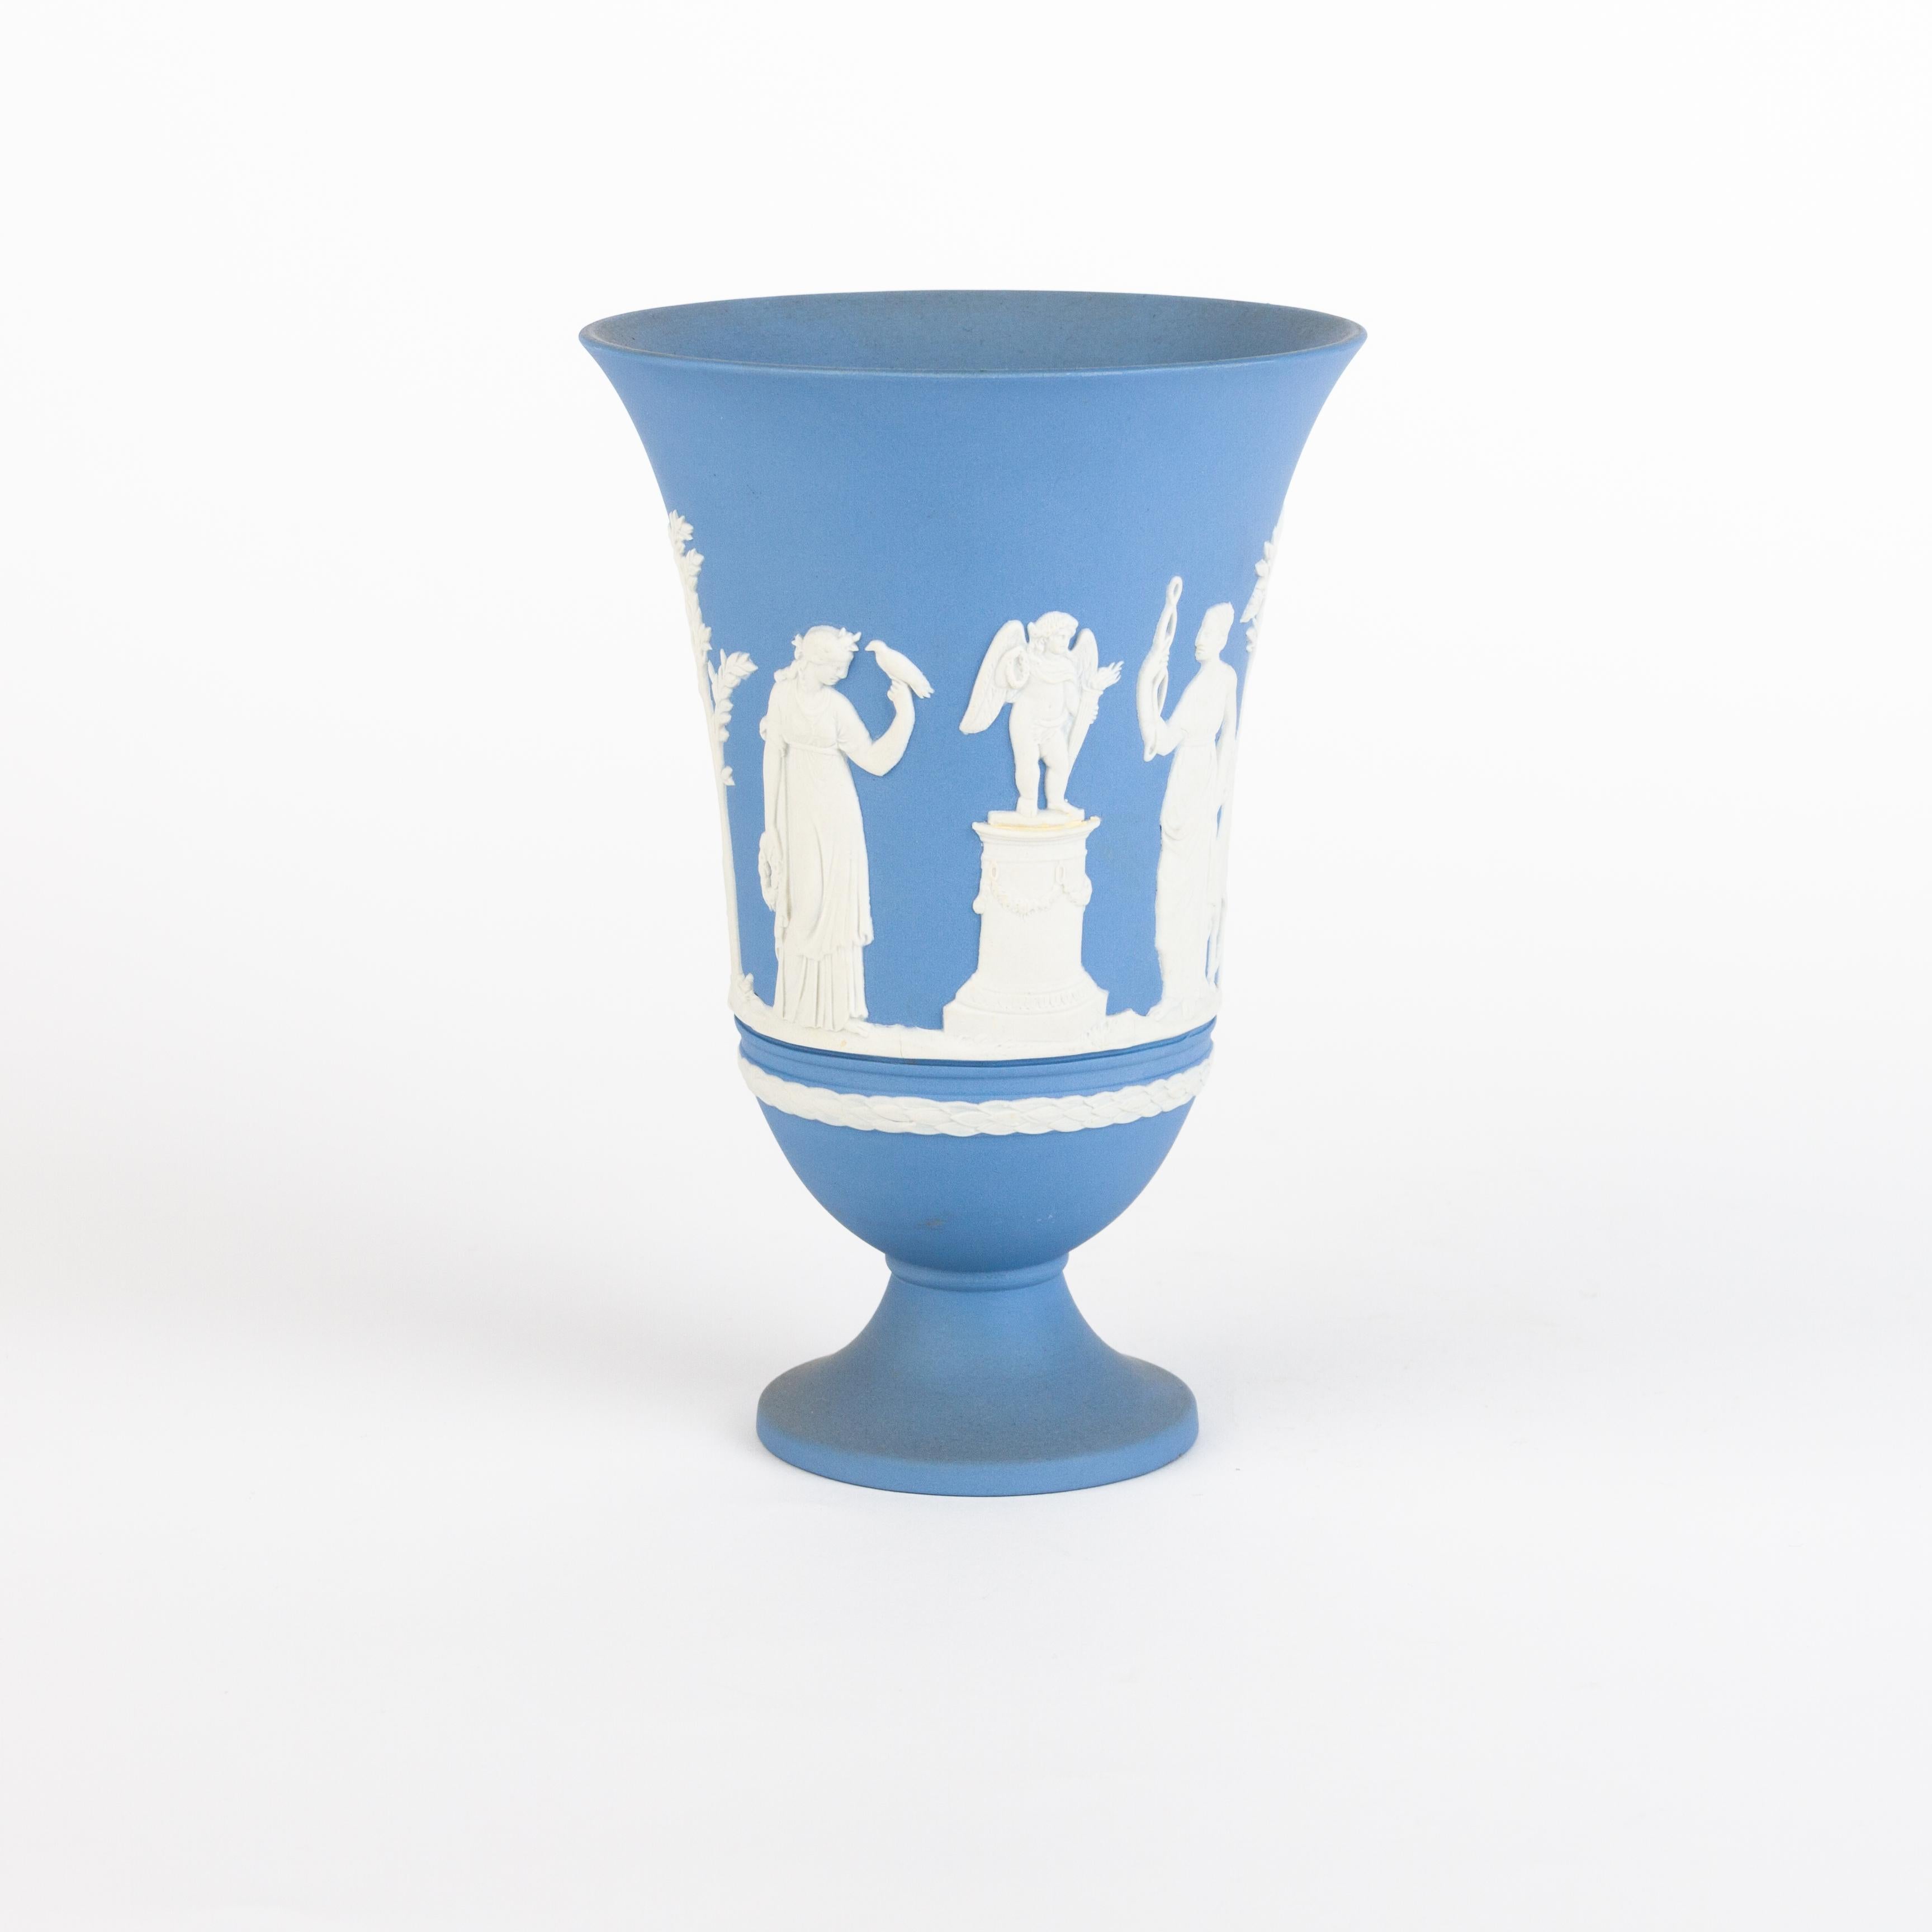 Wedgwood Blue Jasperware Neoclassical Vase
Good condition
Free international shipping.